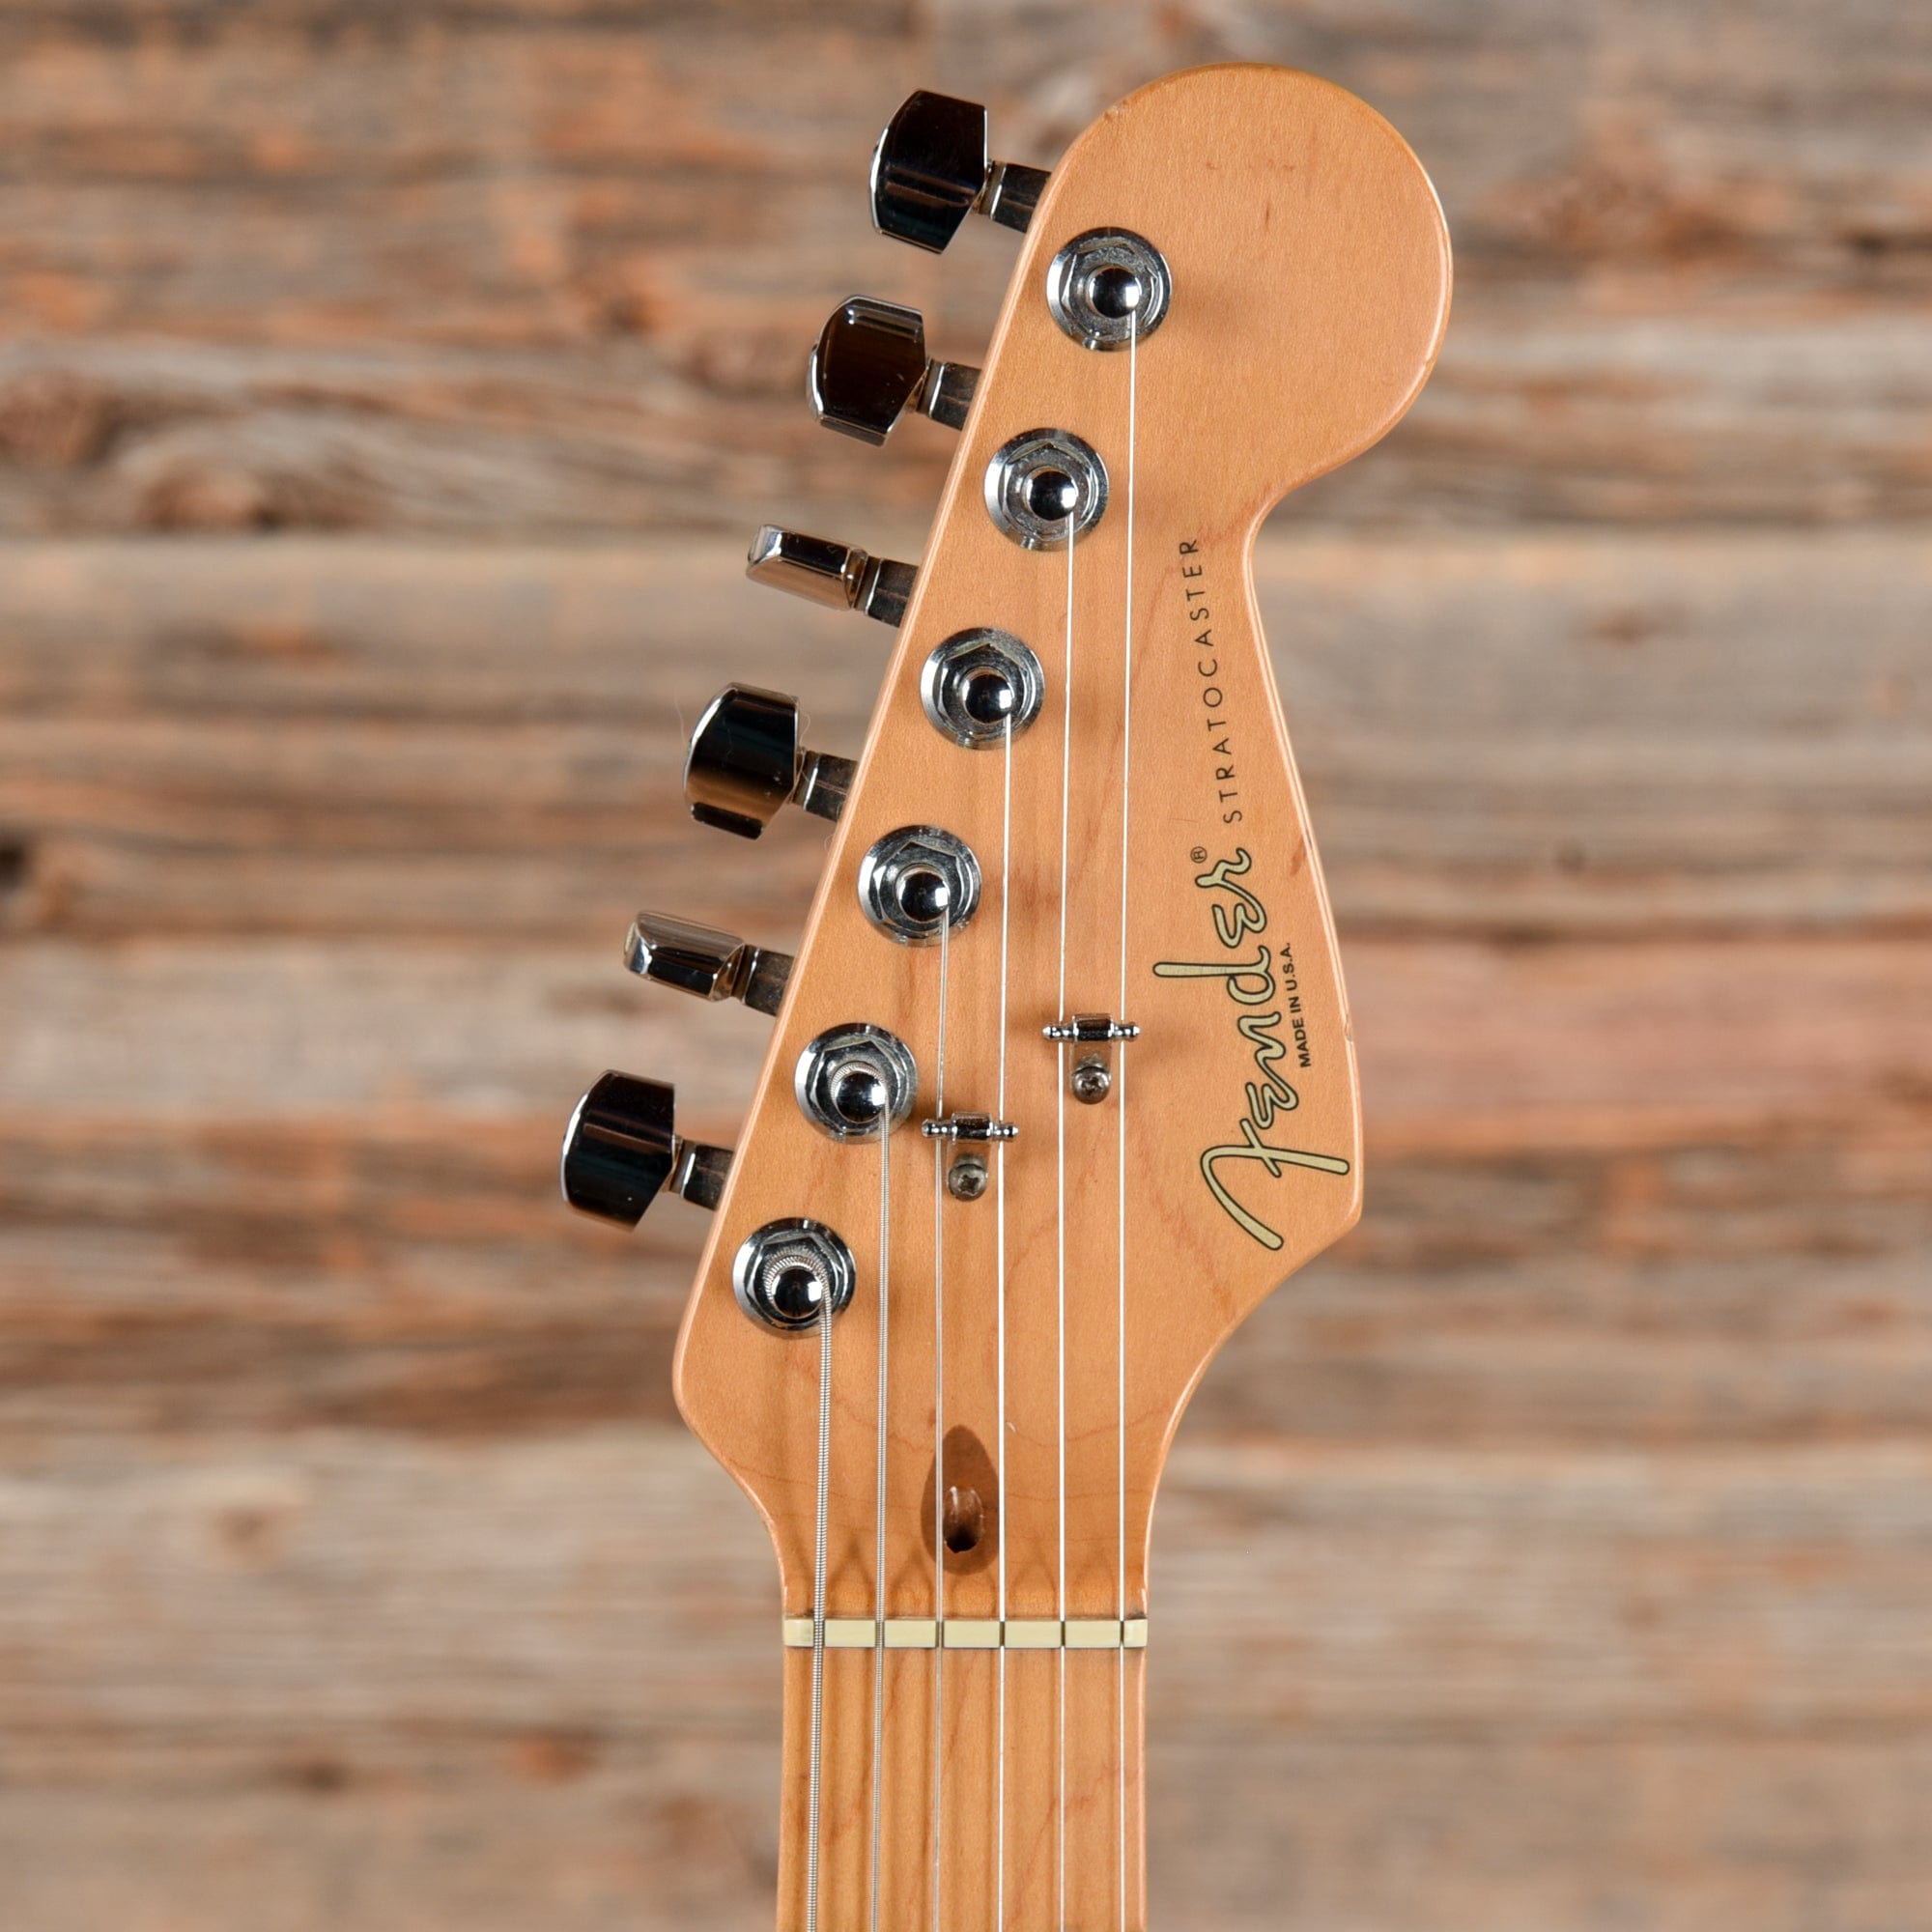 Fender American Standard Stratocaster Inca Silver 1999 Electric Guitars / Solid Body